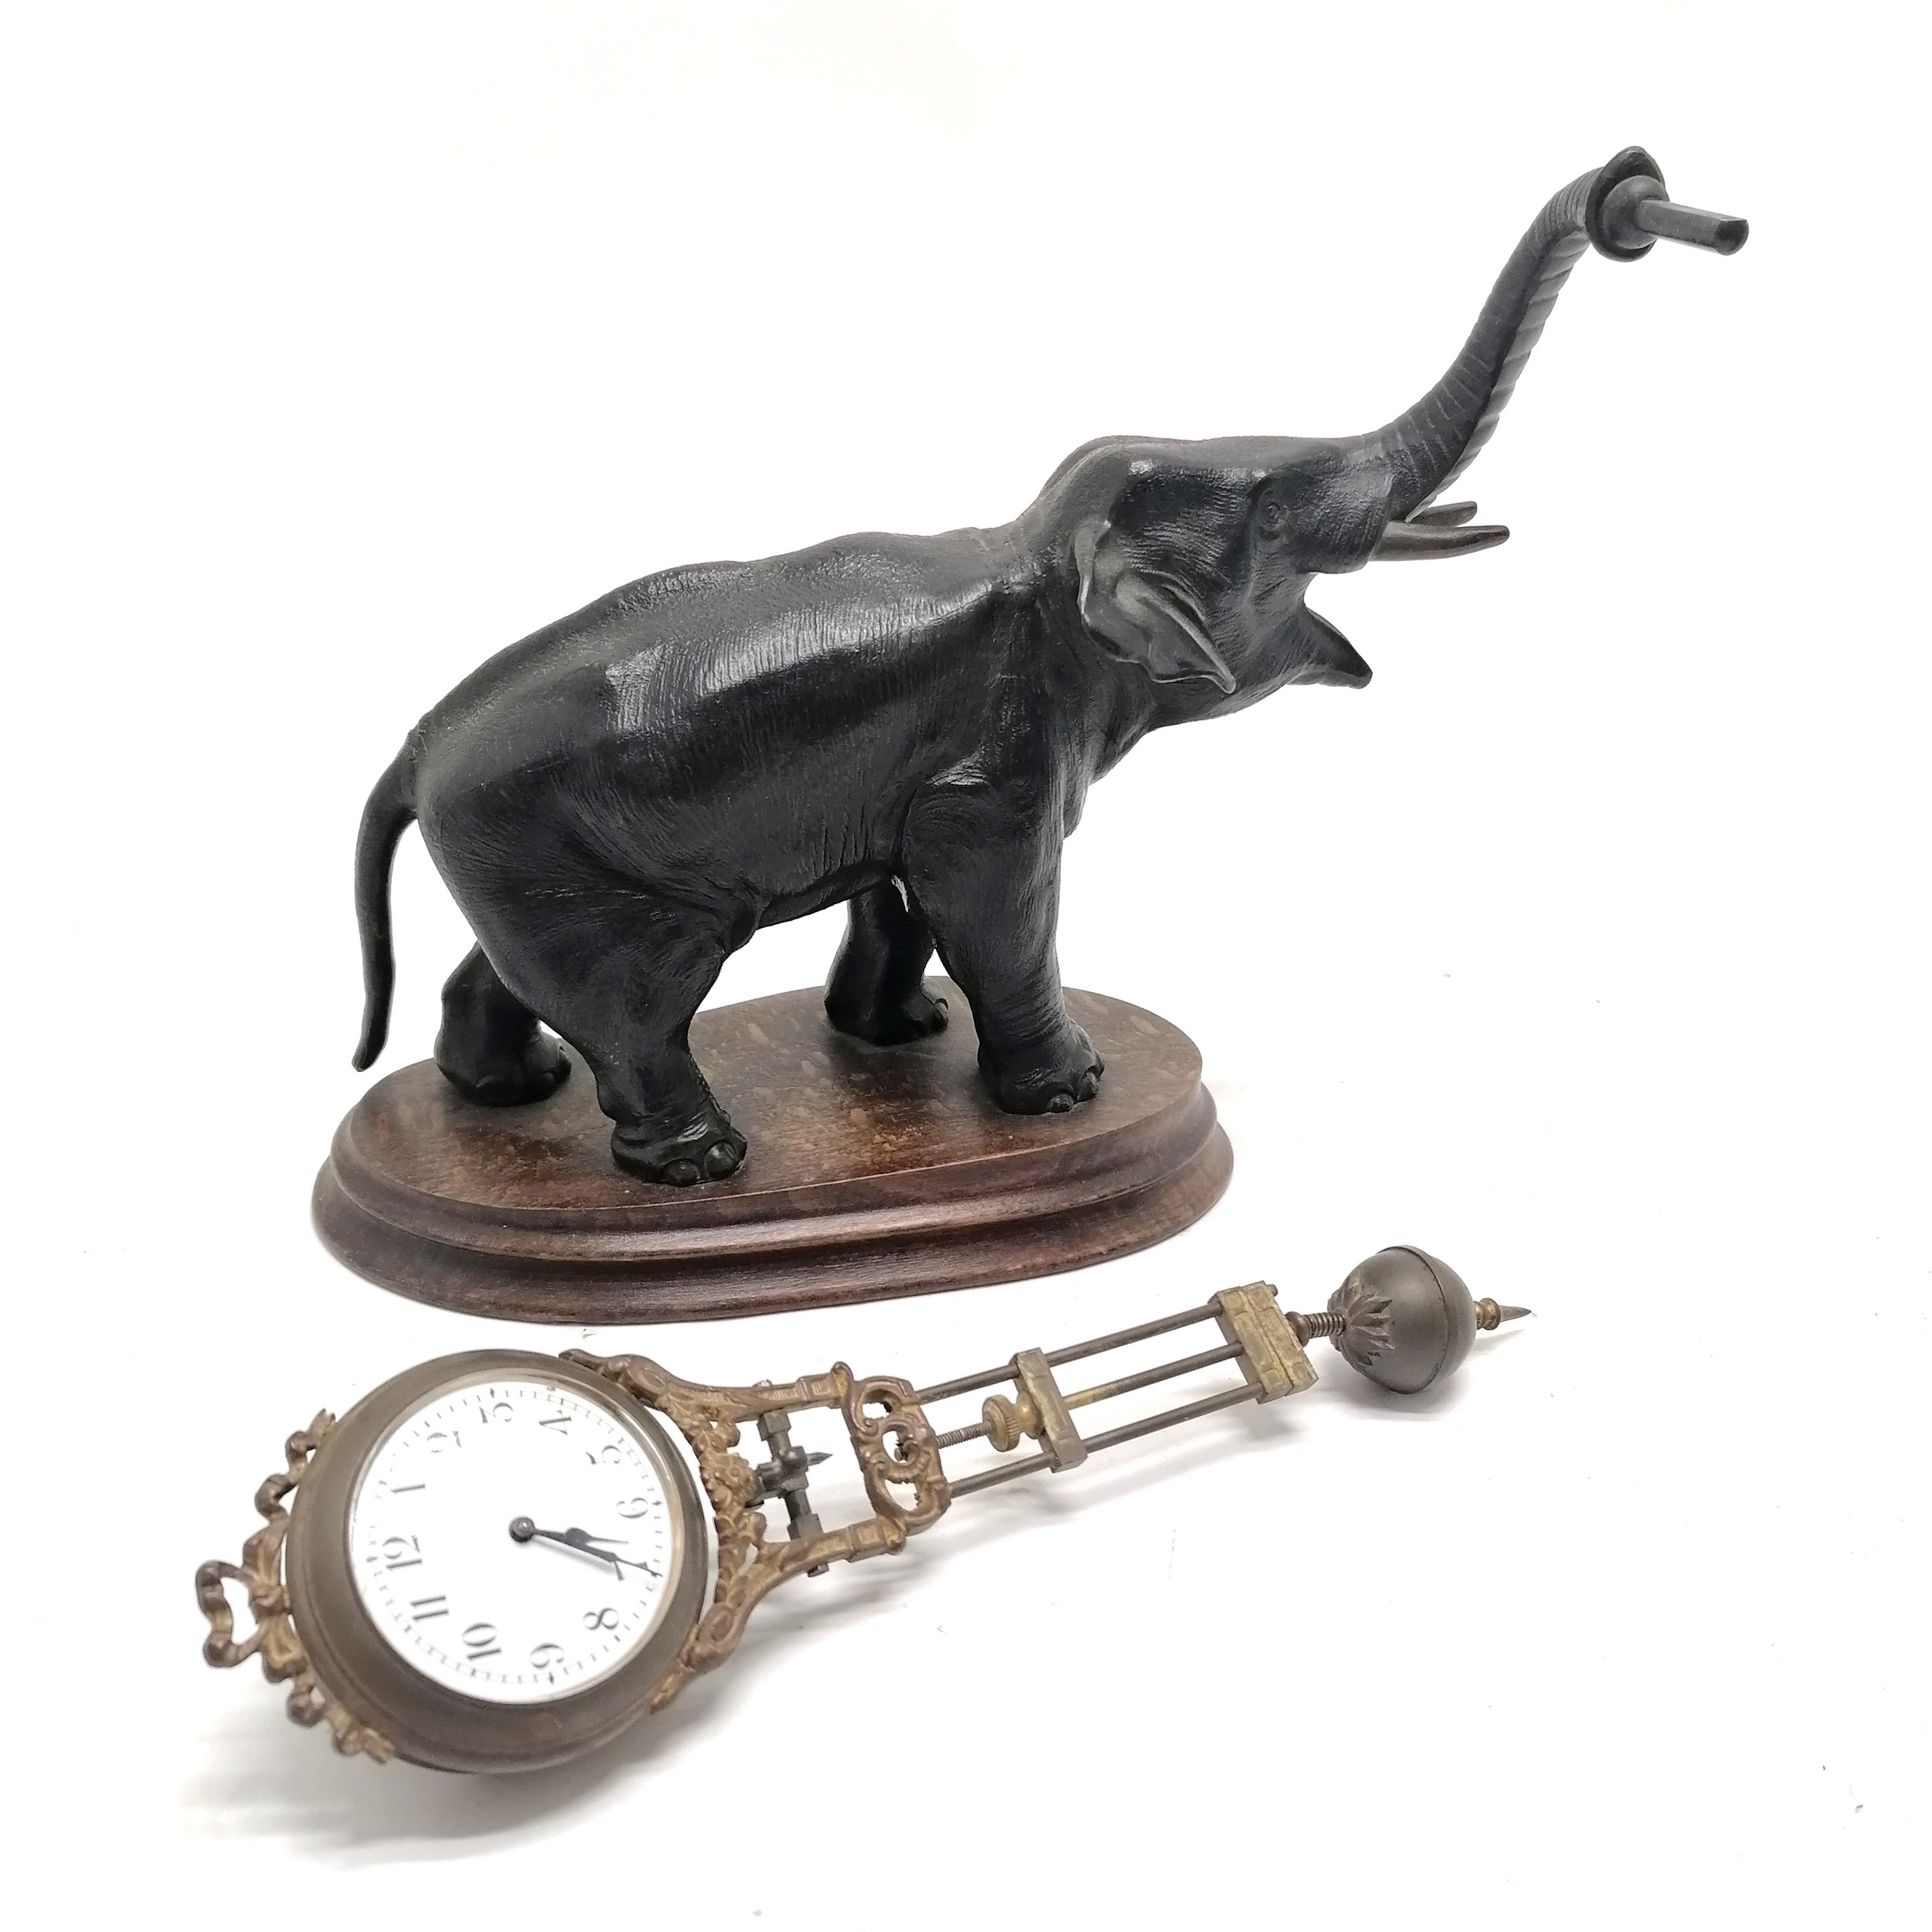 Antique French bronze Elephant pendulum clock on a wooden base 28cm high - the pendulum is bent - Image 2 of 8